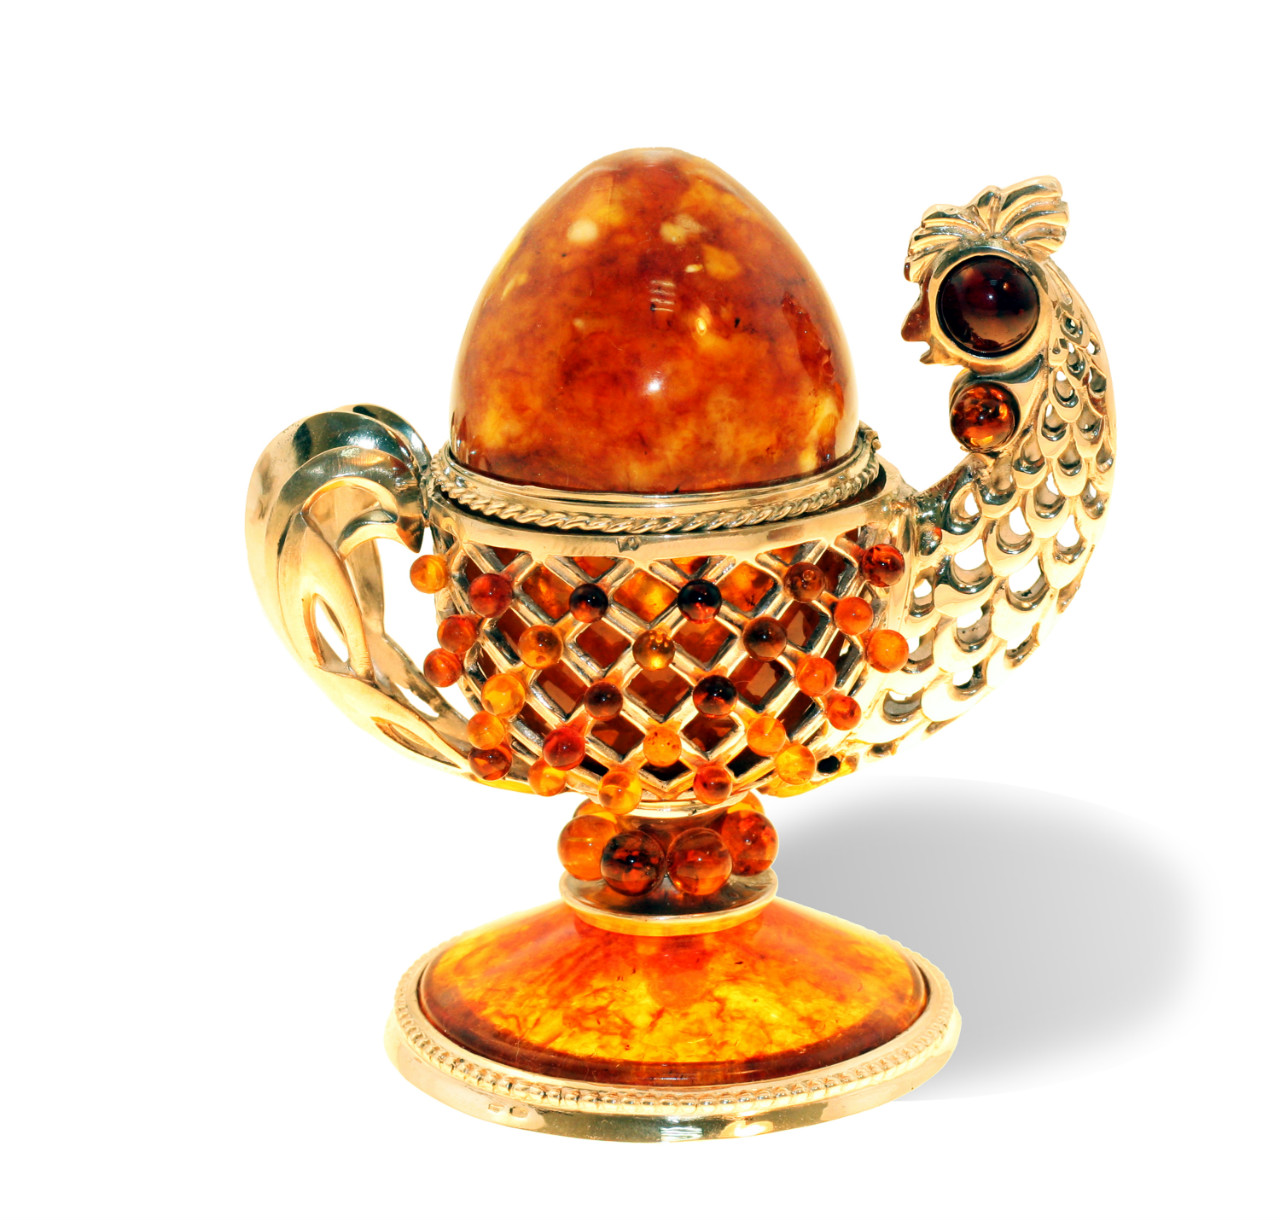 Сувенир-шкатулка "курочка" из янтаря